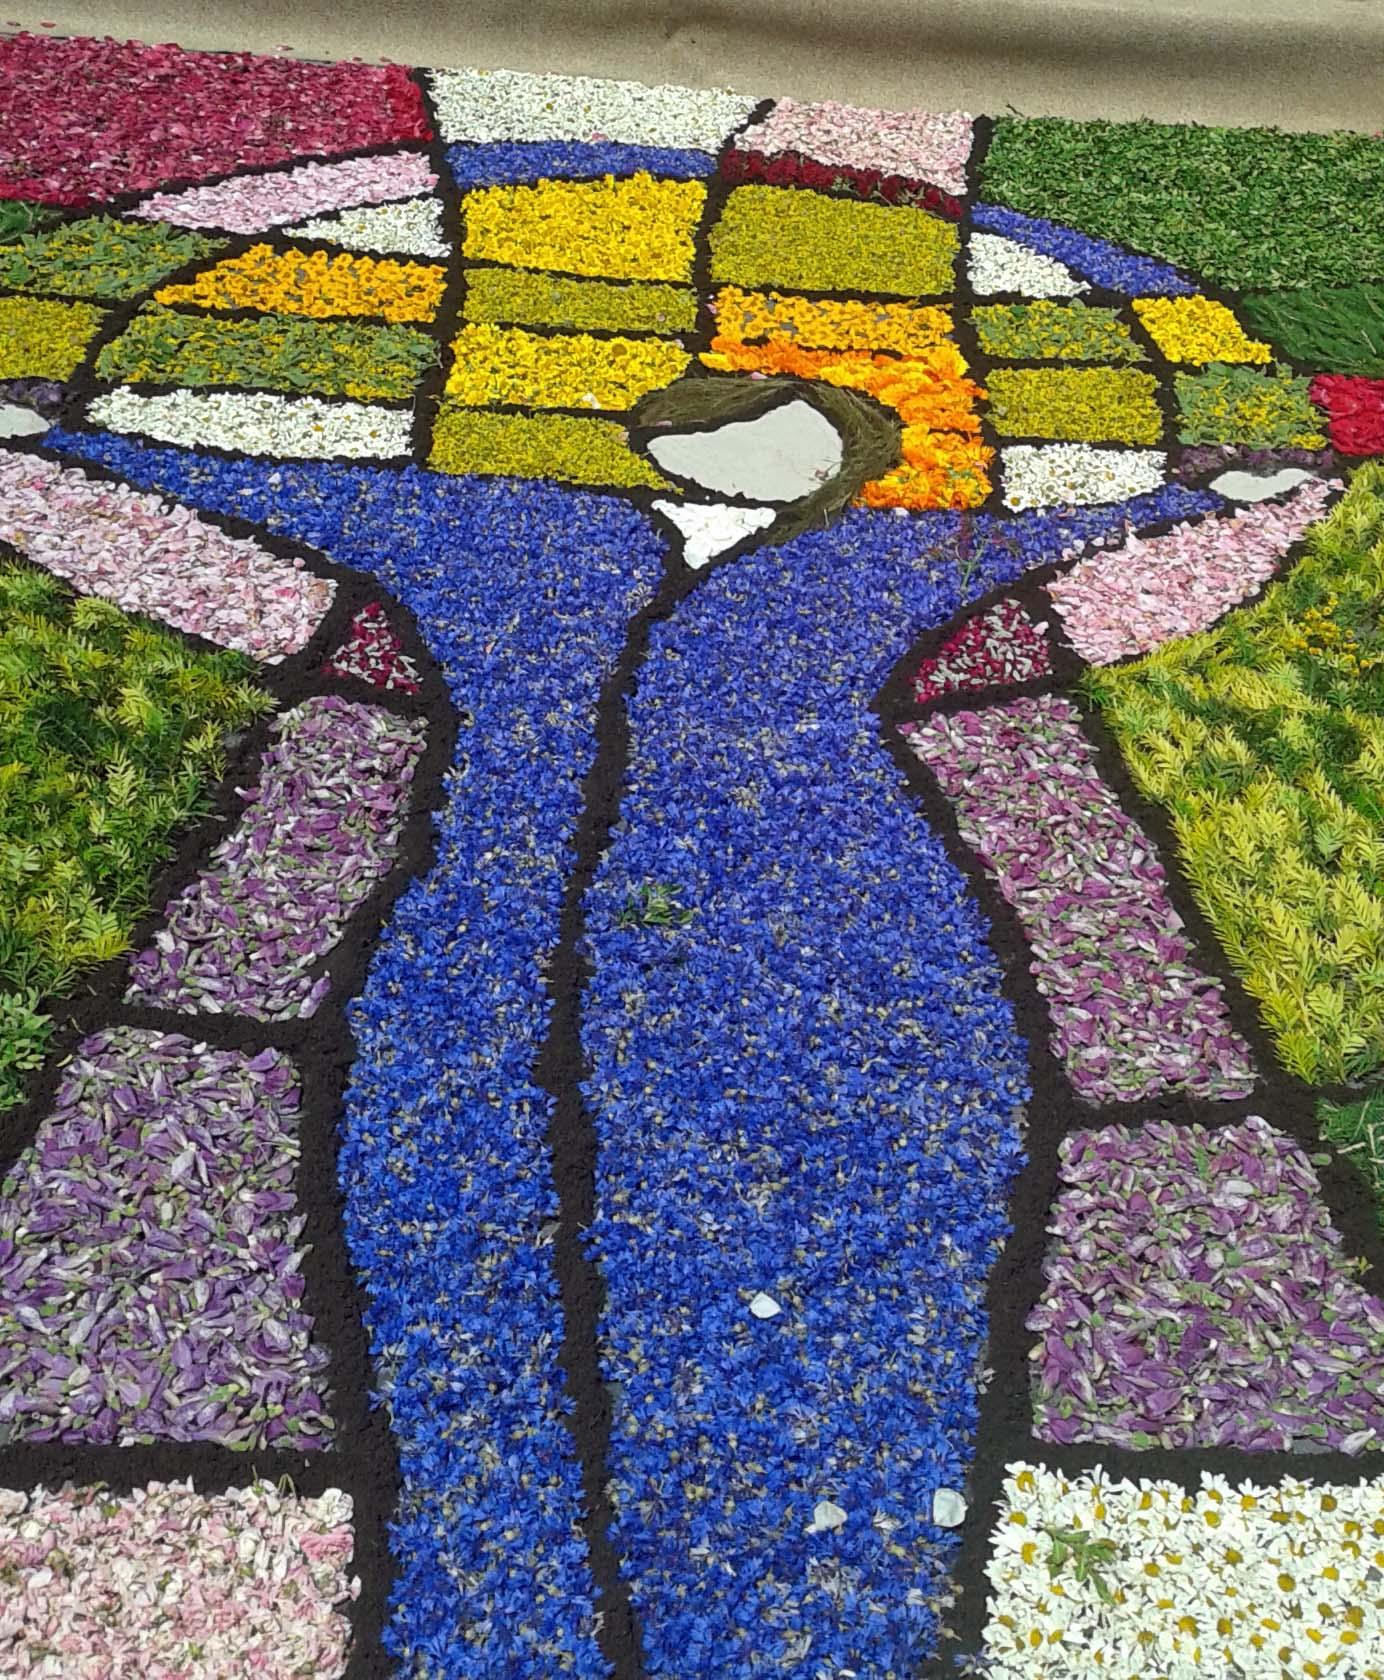 Blumenteppich an Fronleichnam